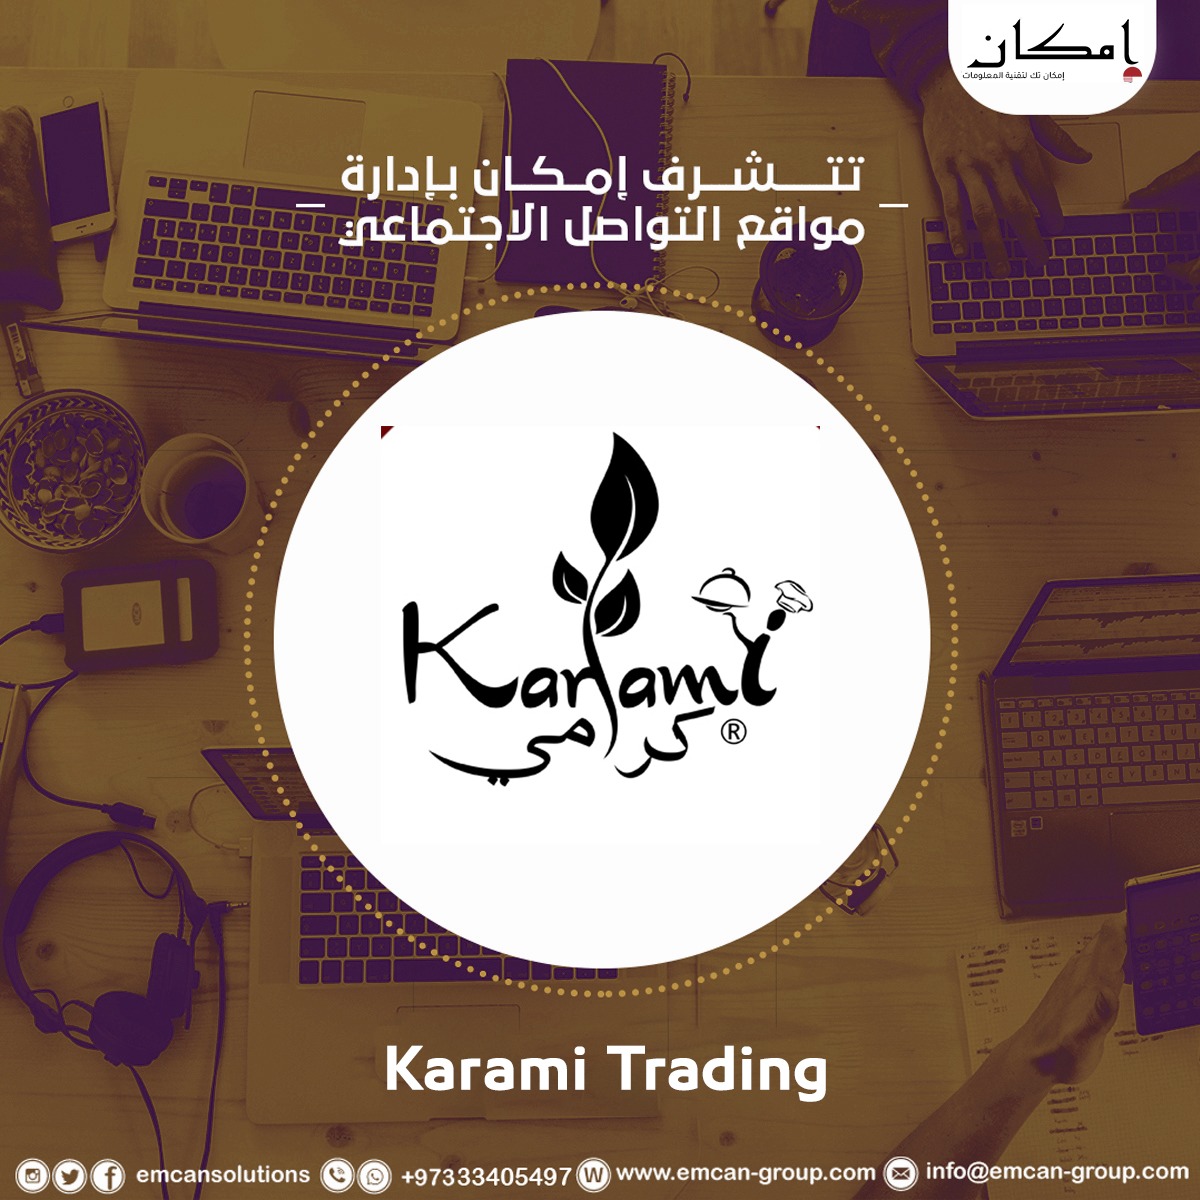 Social media management for Karami Trade